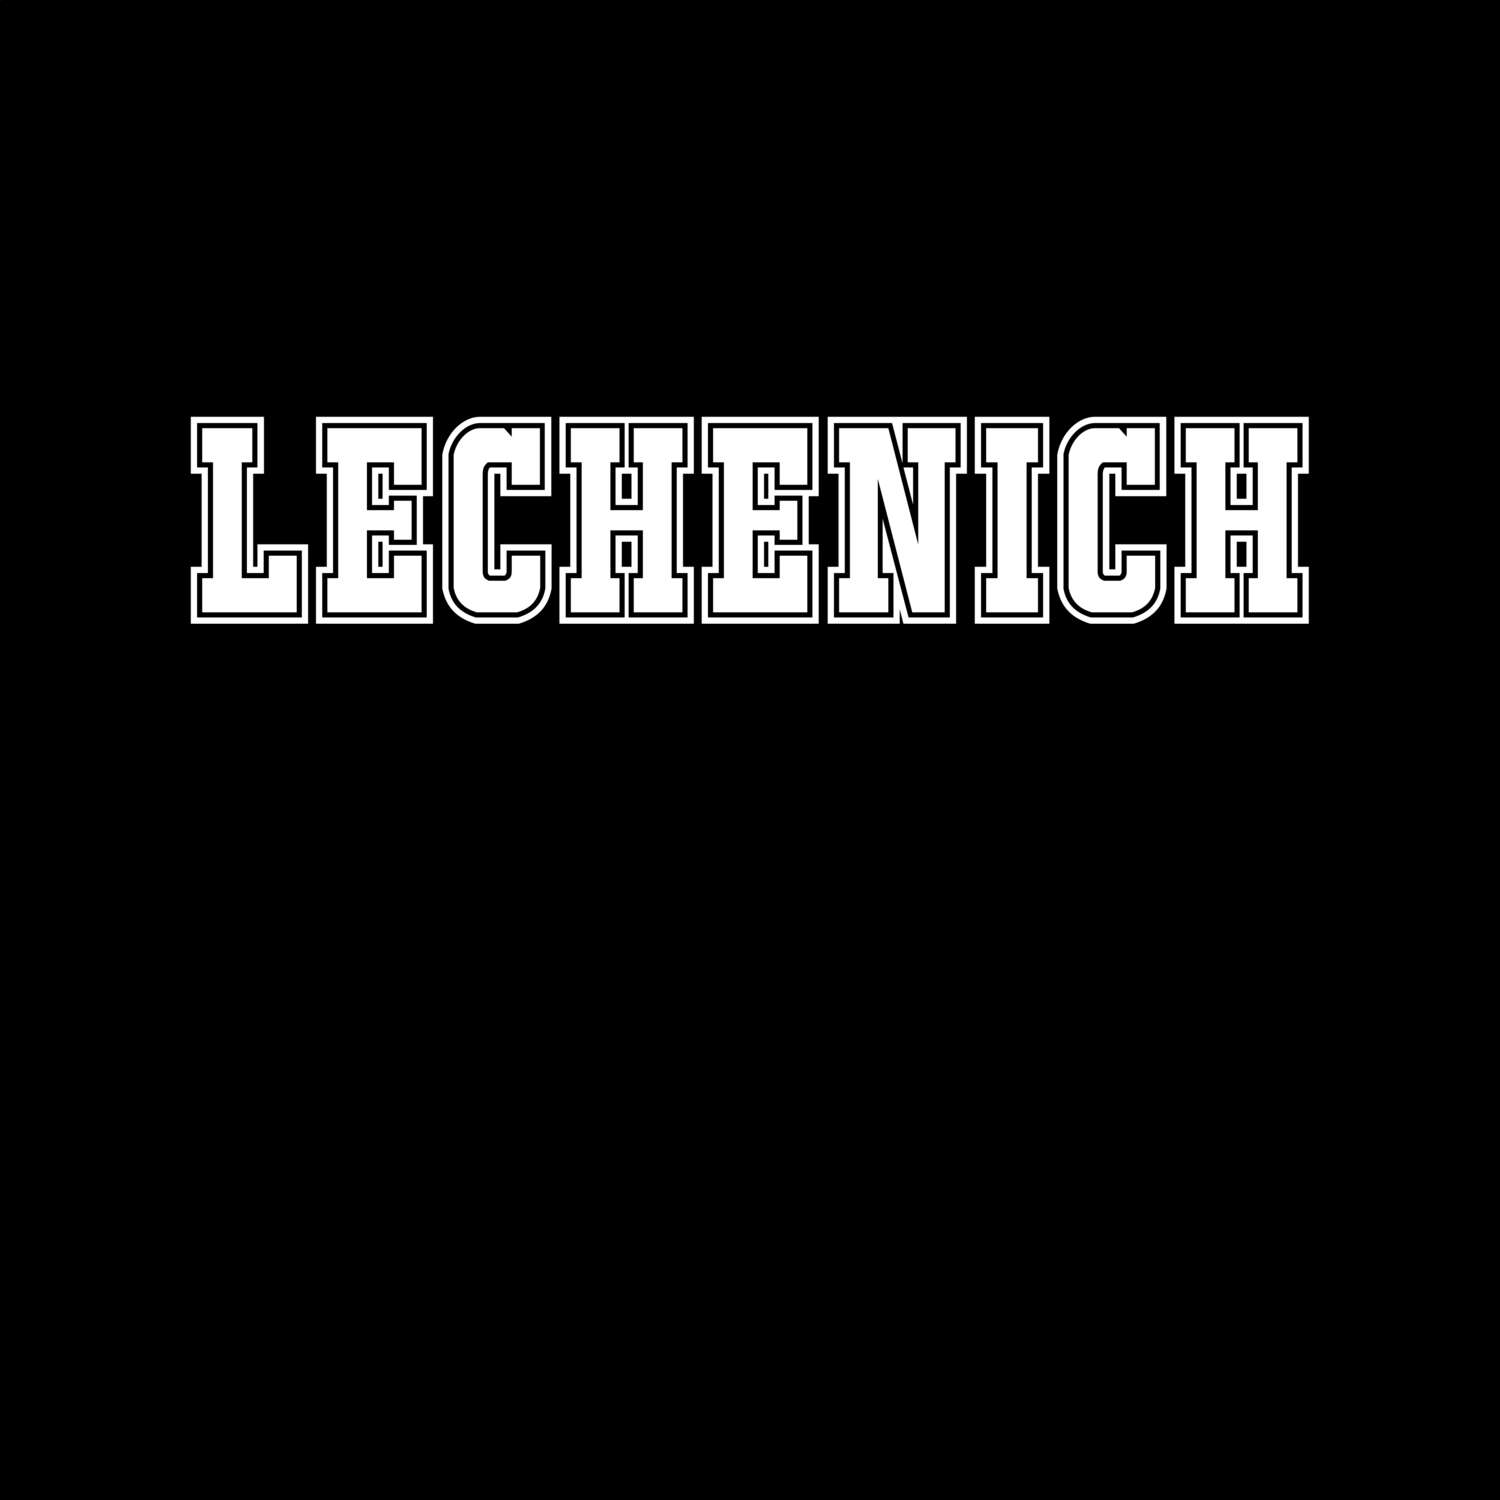 Lechenich T-Shirt »Classic«